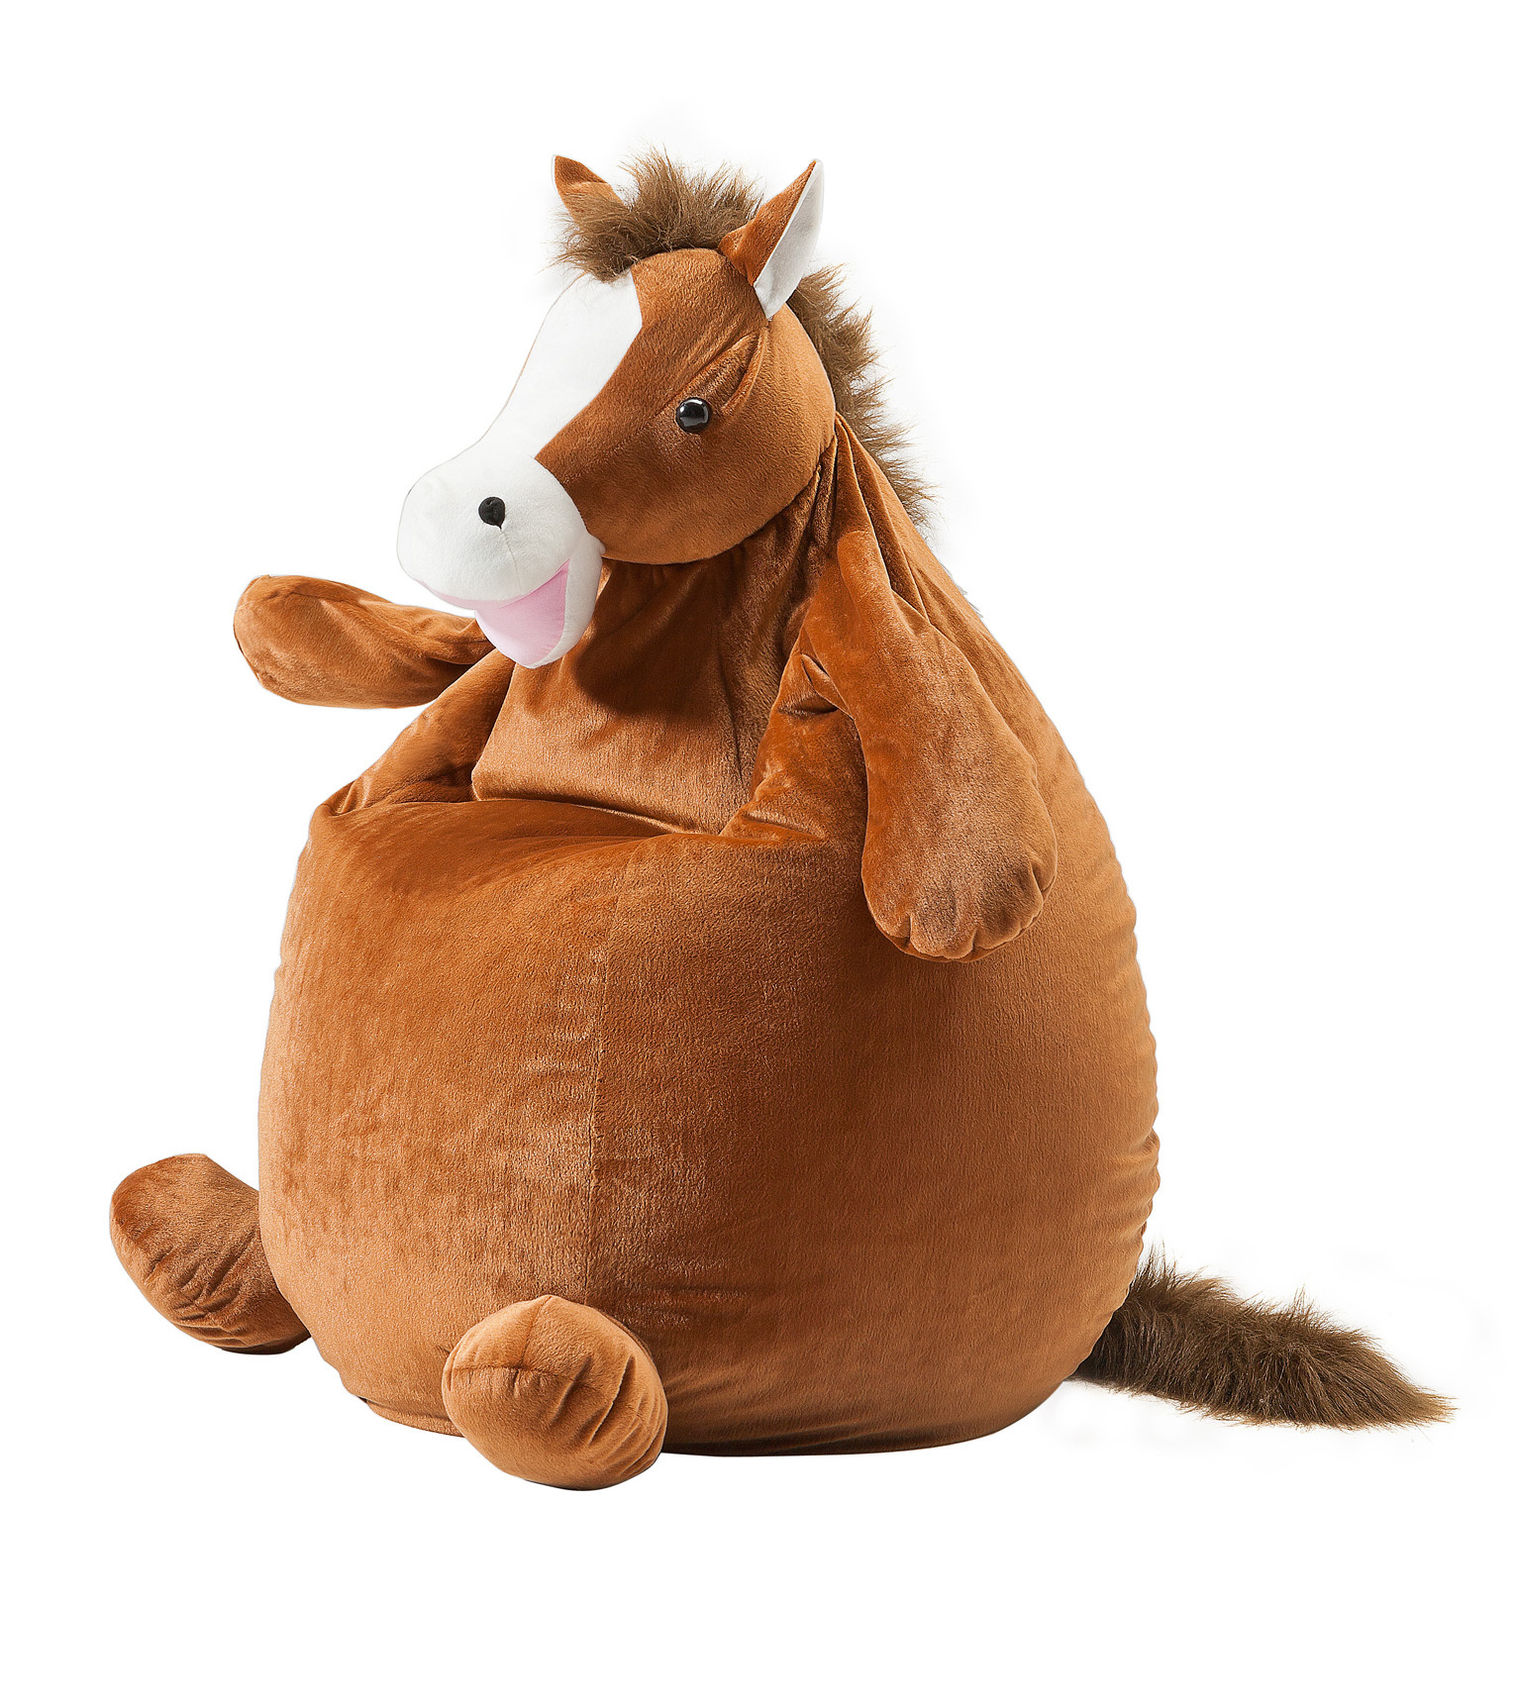 Sitzsack - Bean Bag Pferd Goldie, braun bestellen | Weltbild.de